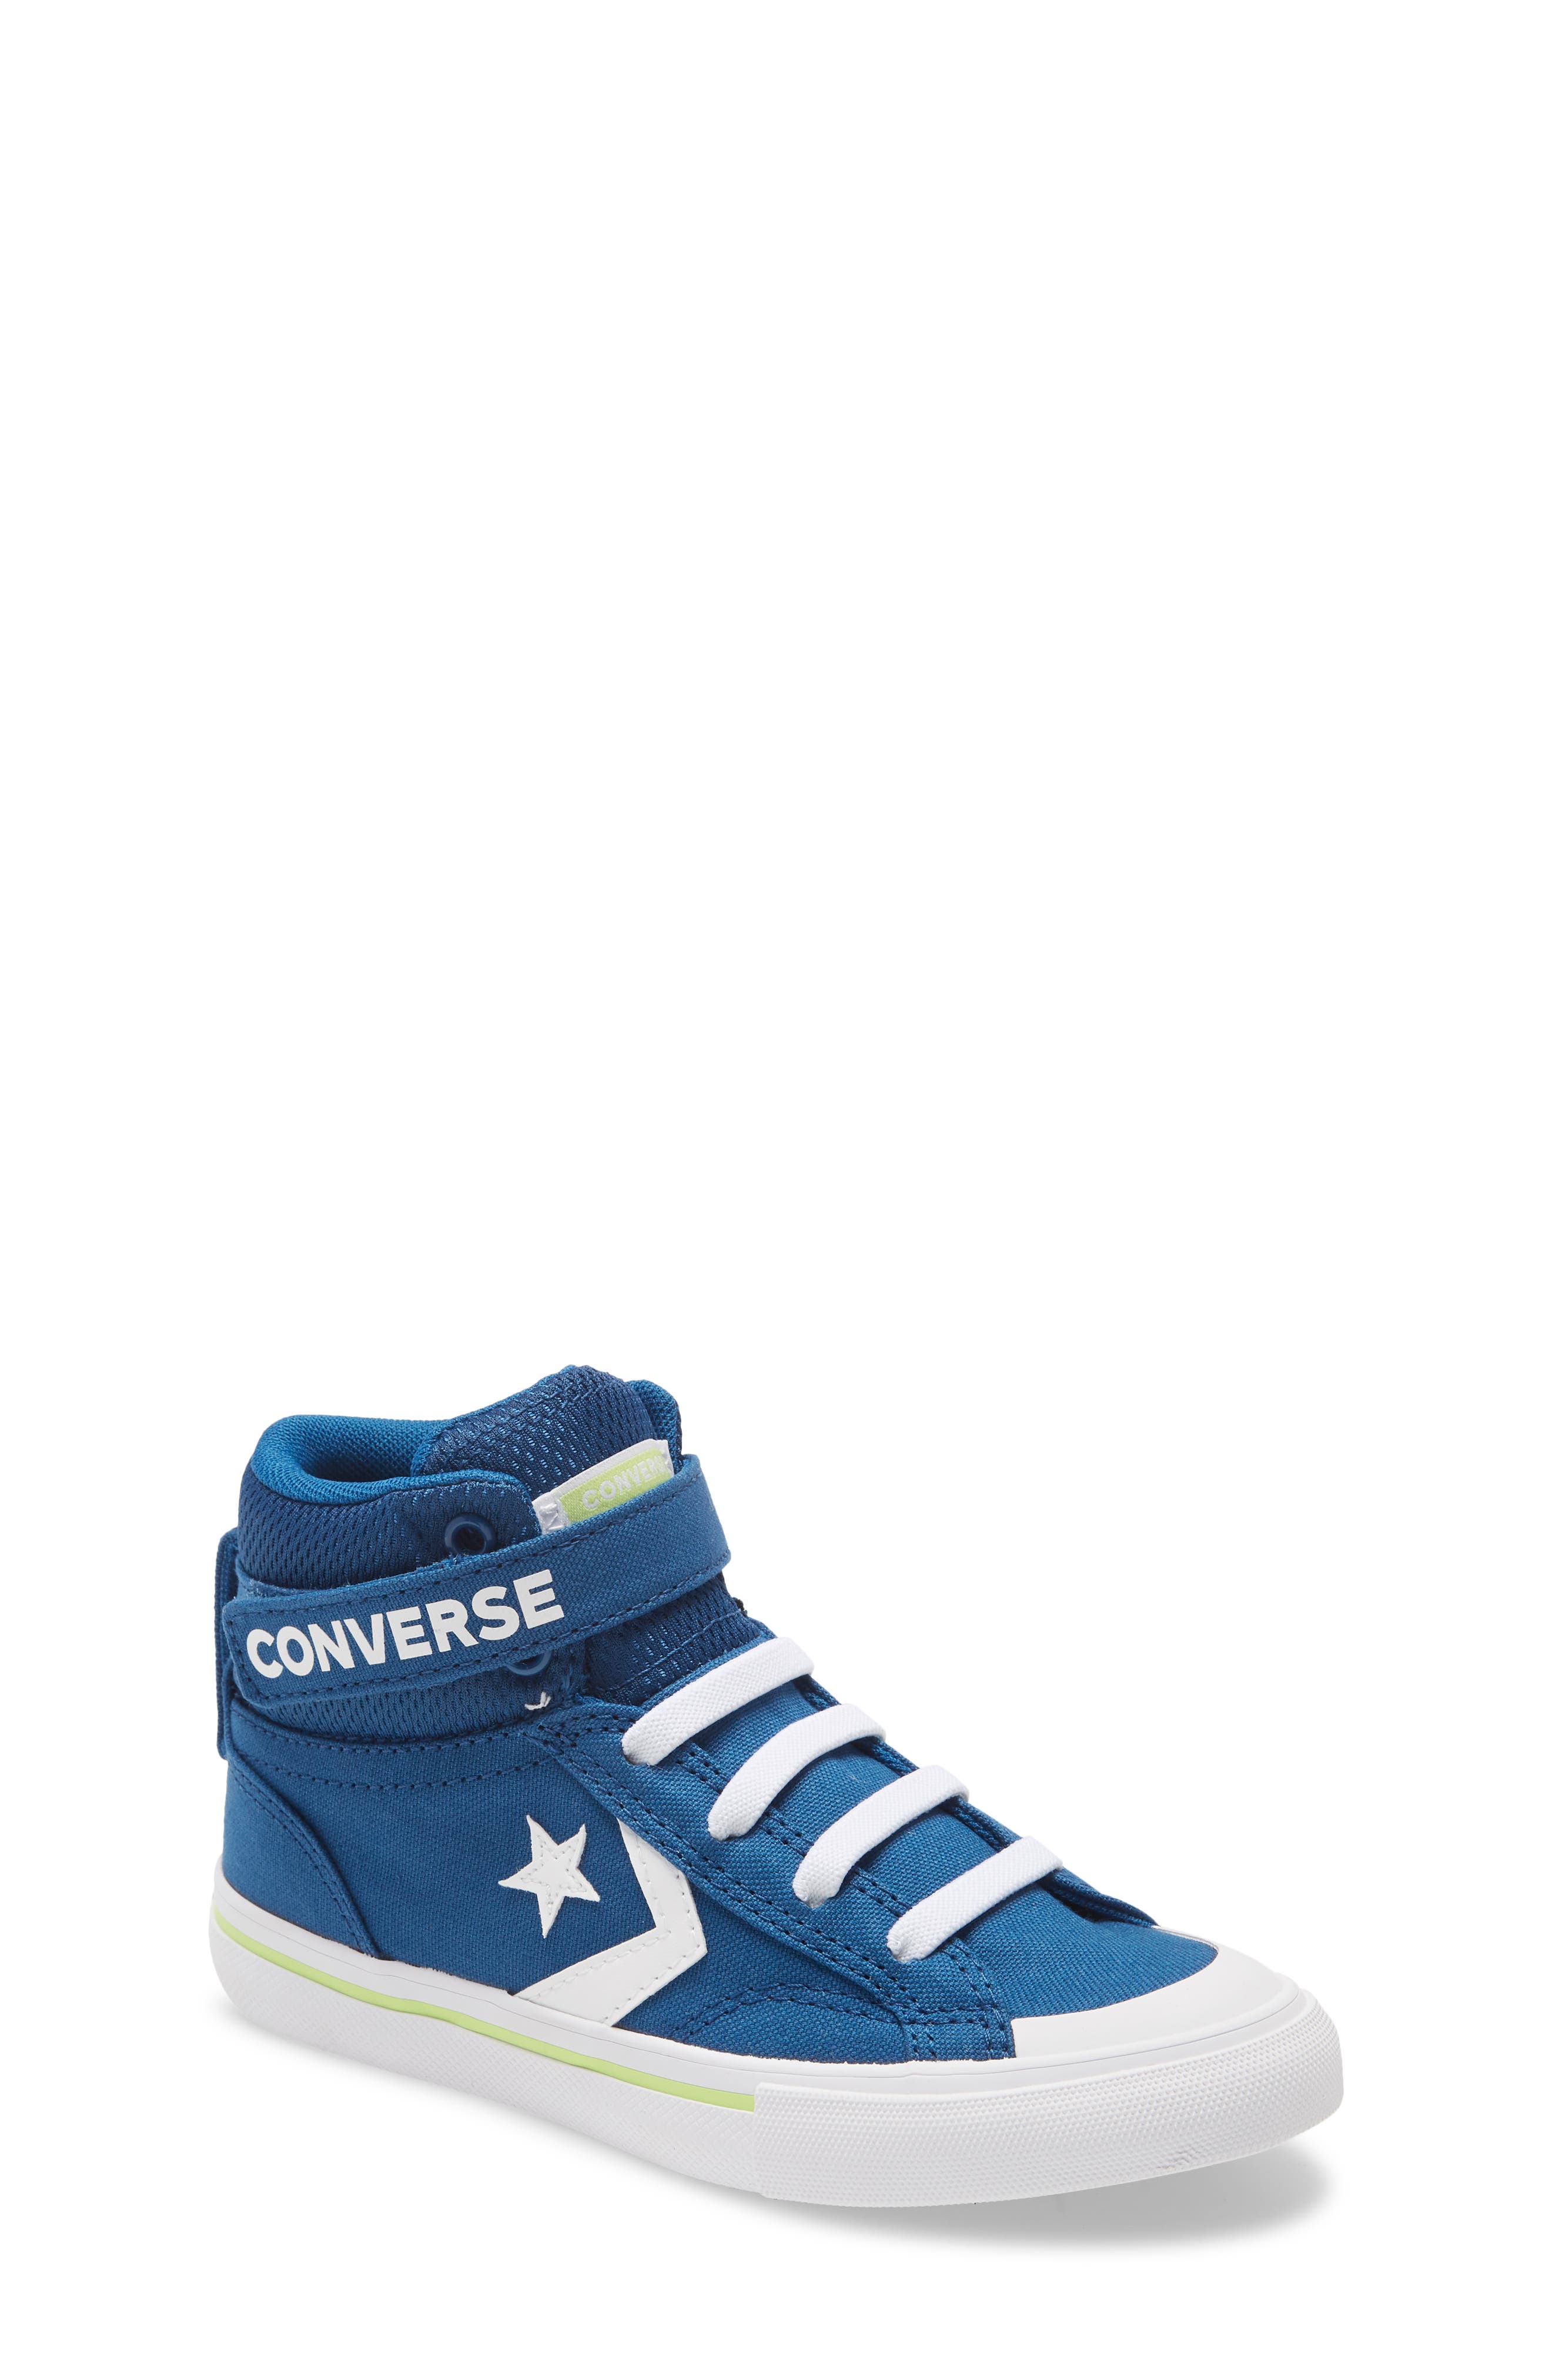 Converse Big Kid Shoes (Sizes 3.5-7 